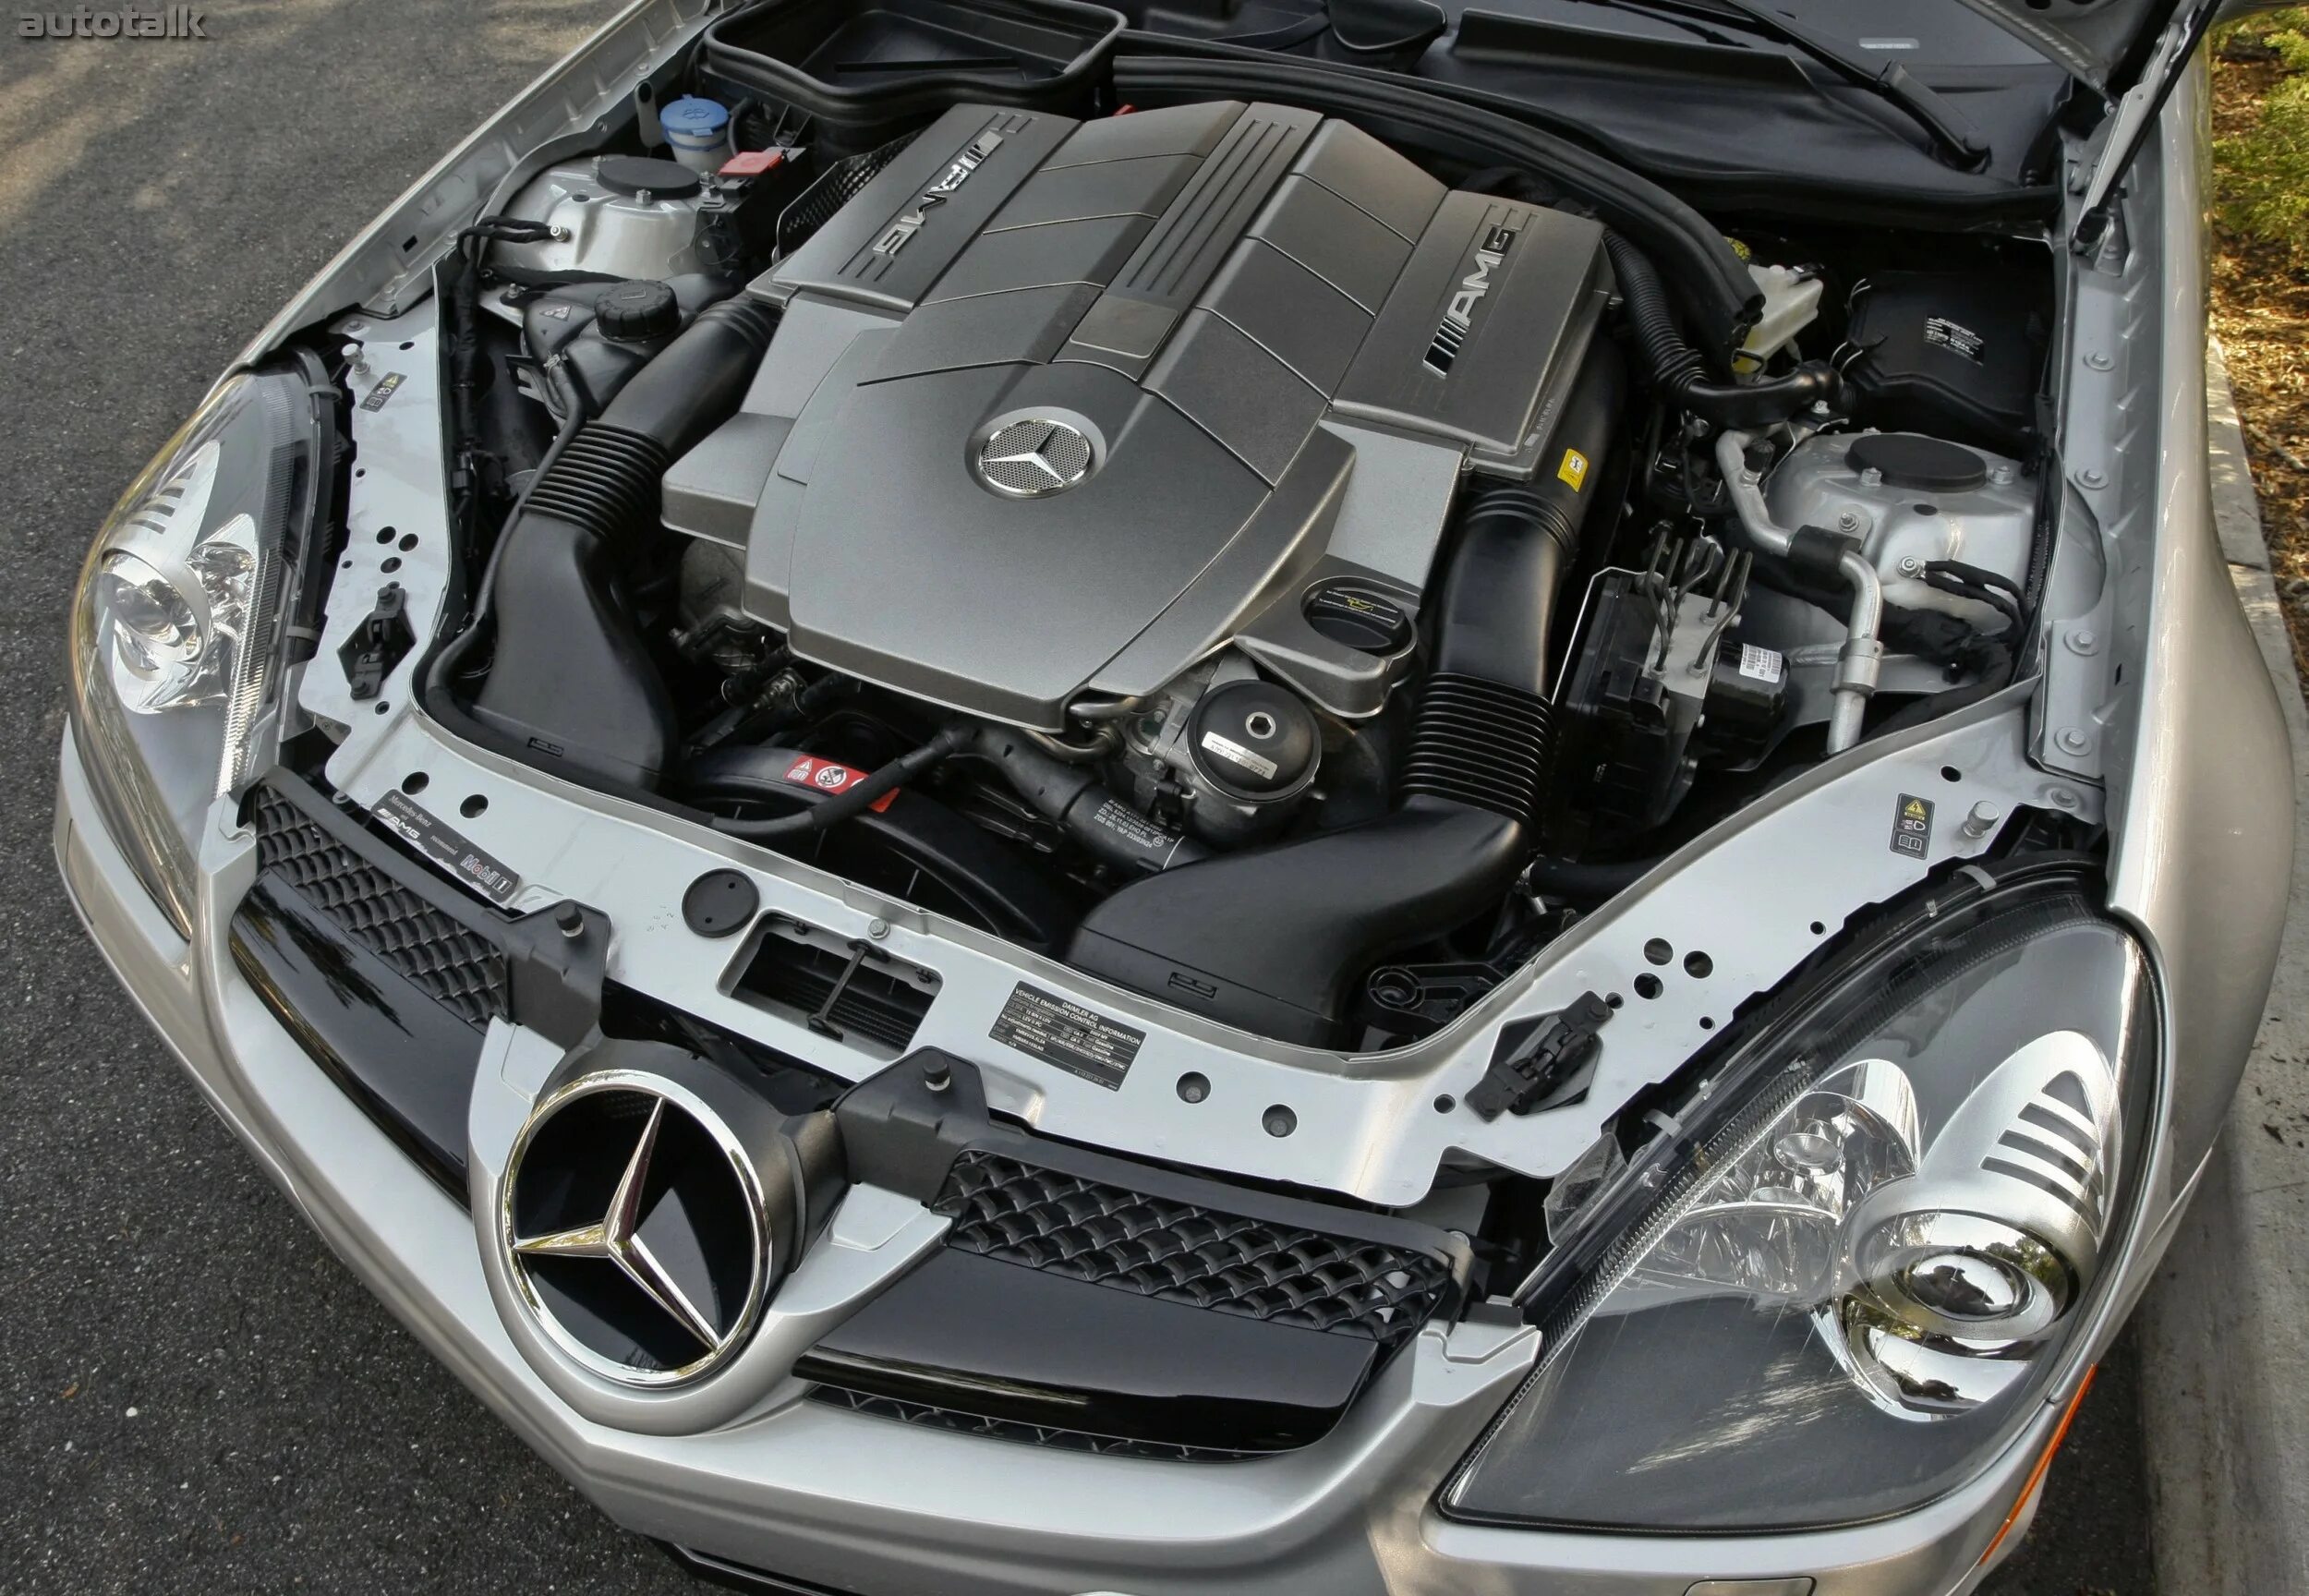 Mercedes e двигатели. M113 Мерседес. Mercedes-Benz m113 engine. Мерседес АМГ мотор. 171 Мотор Мерседес.